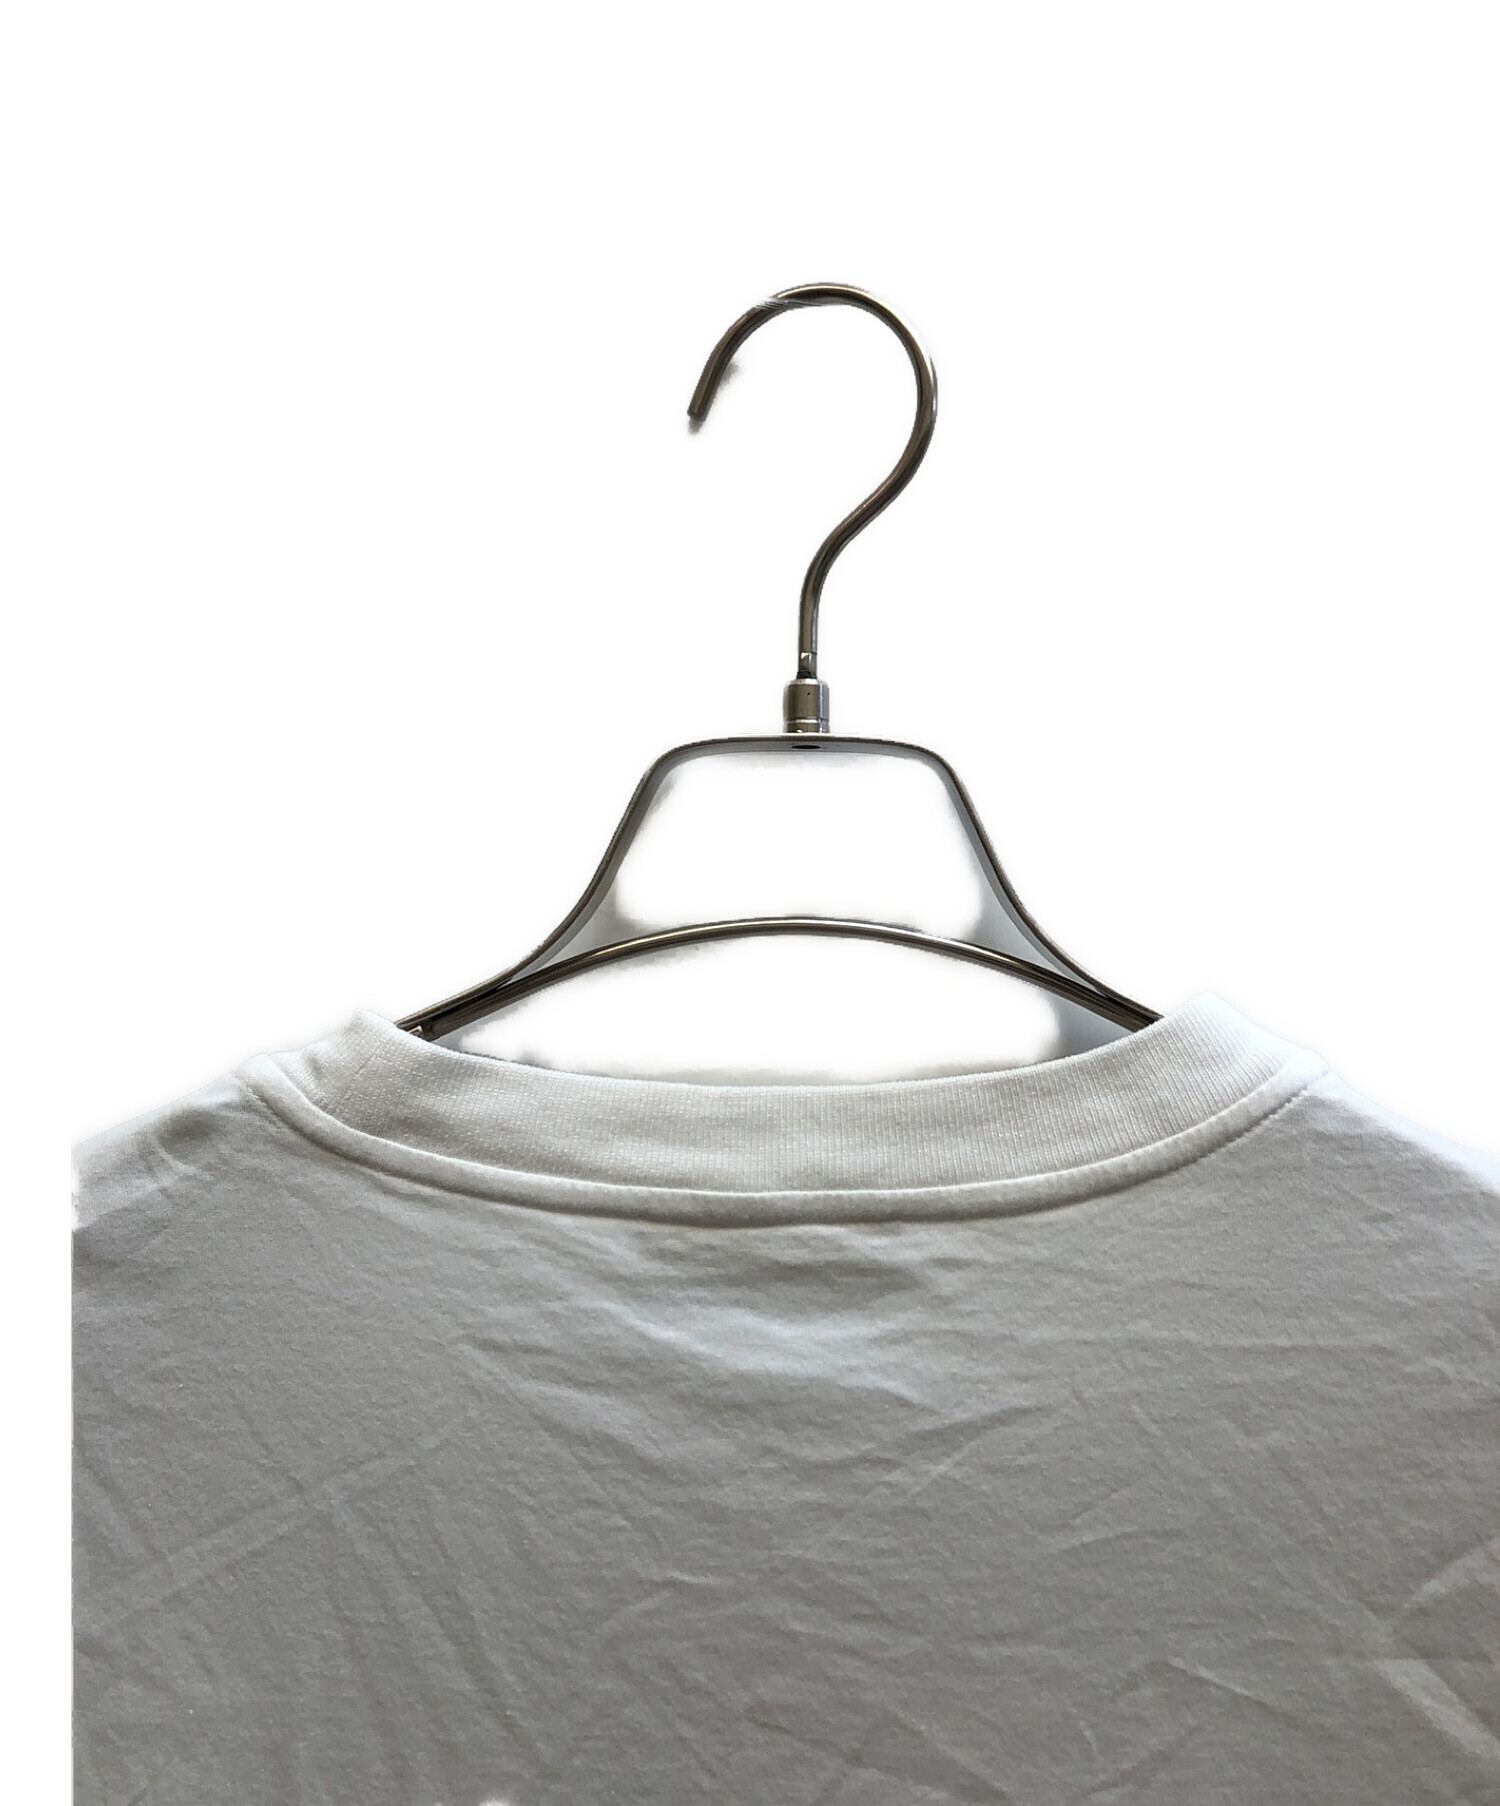 PRADA (プラダ) 三角ロゴTシャツ ホワイト サイズ:M